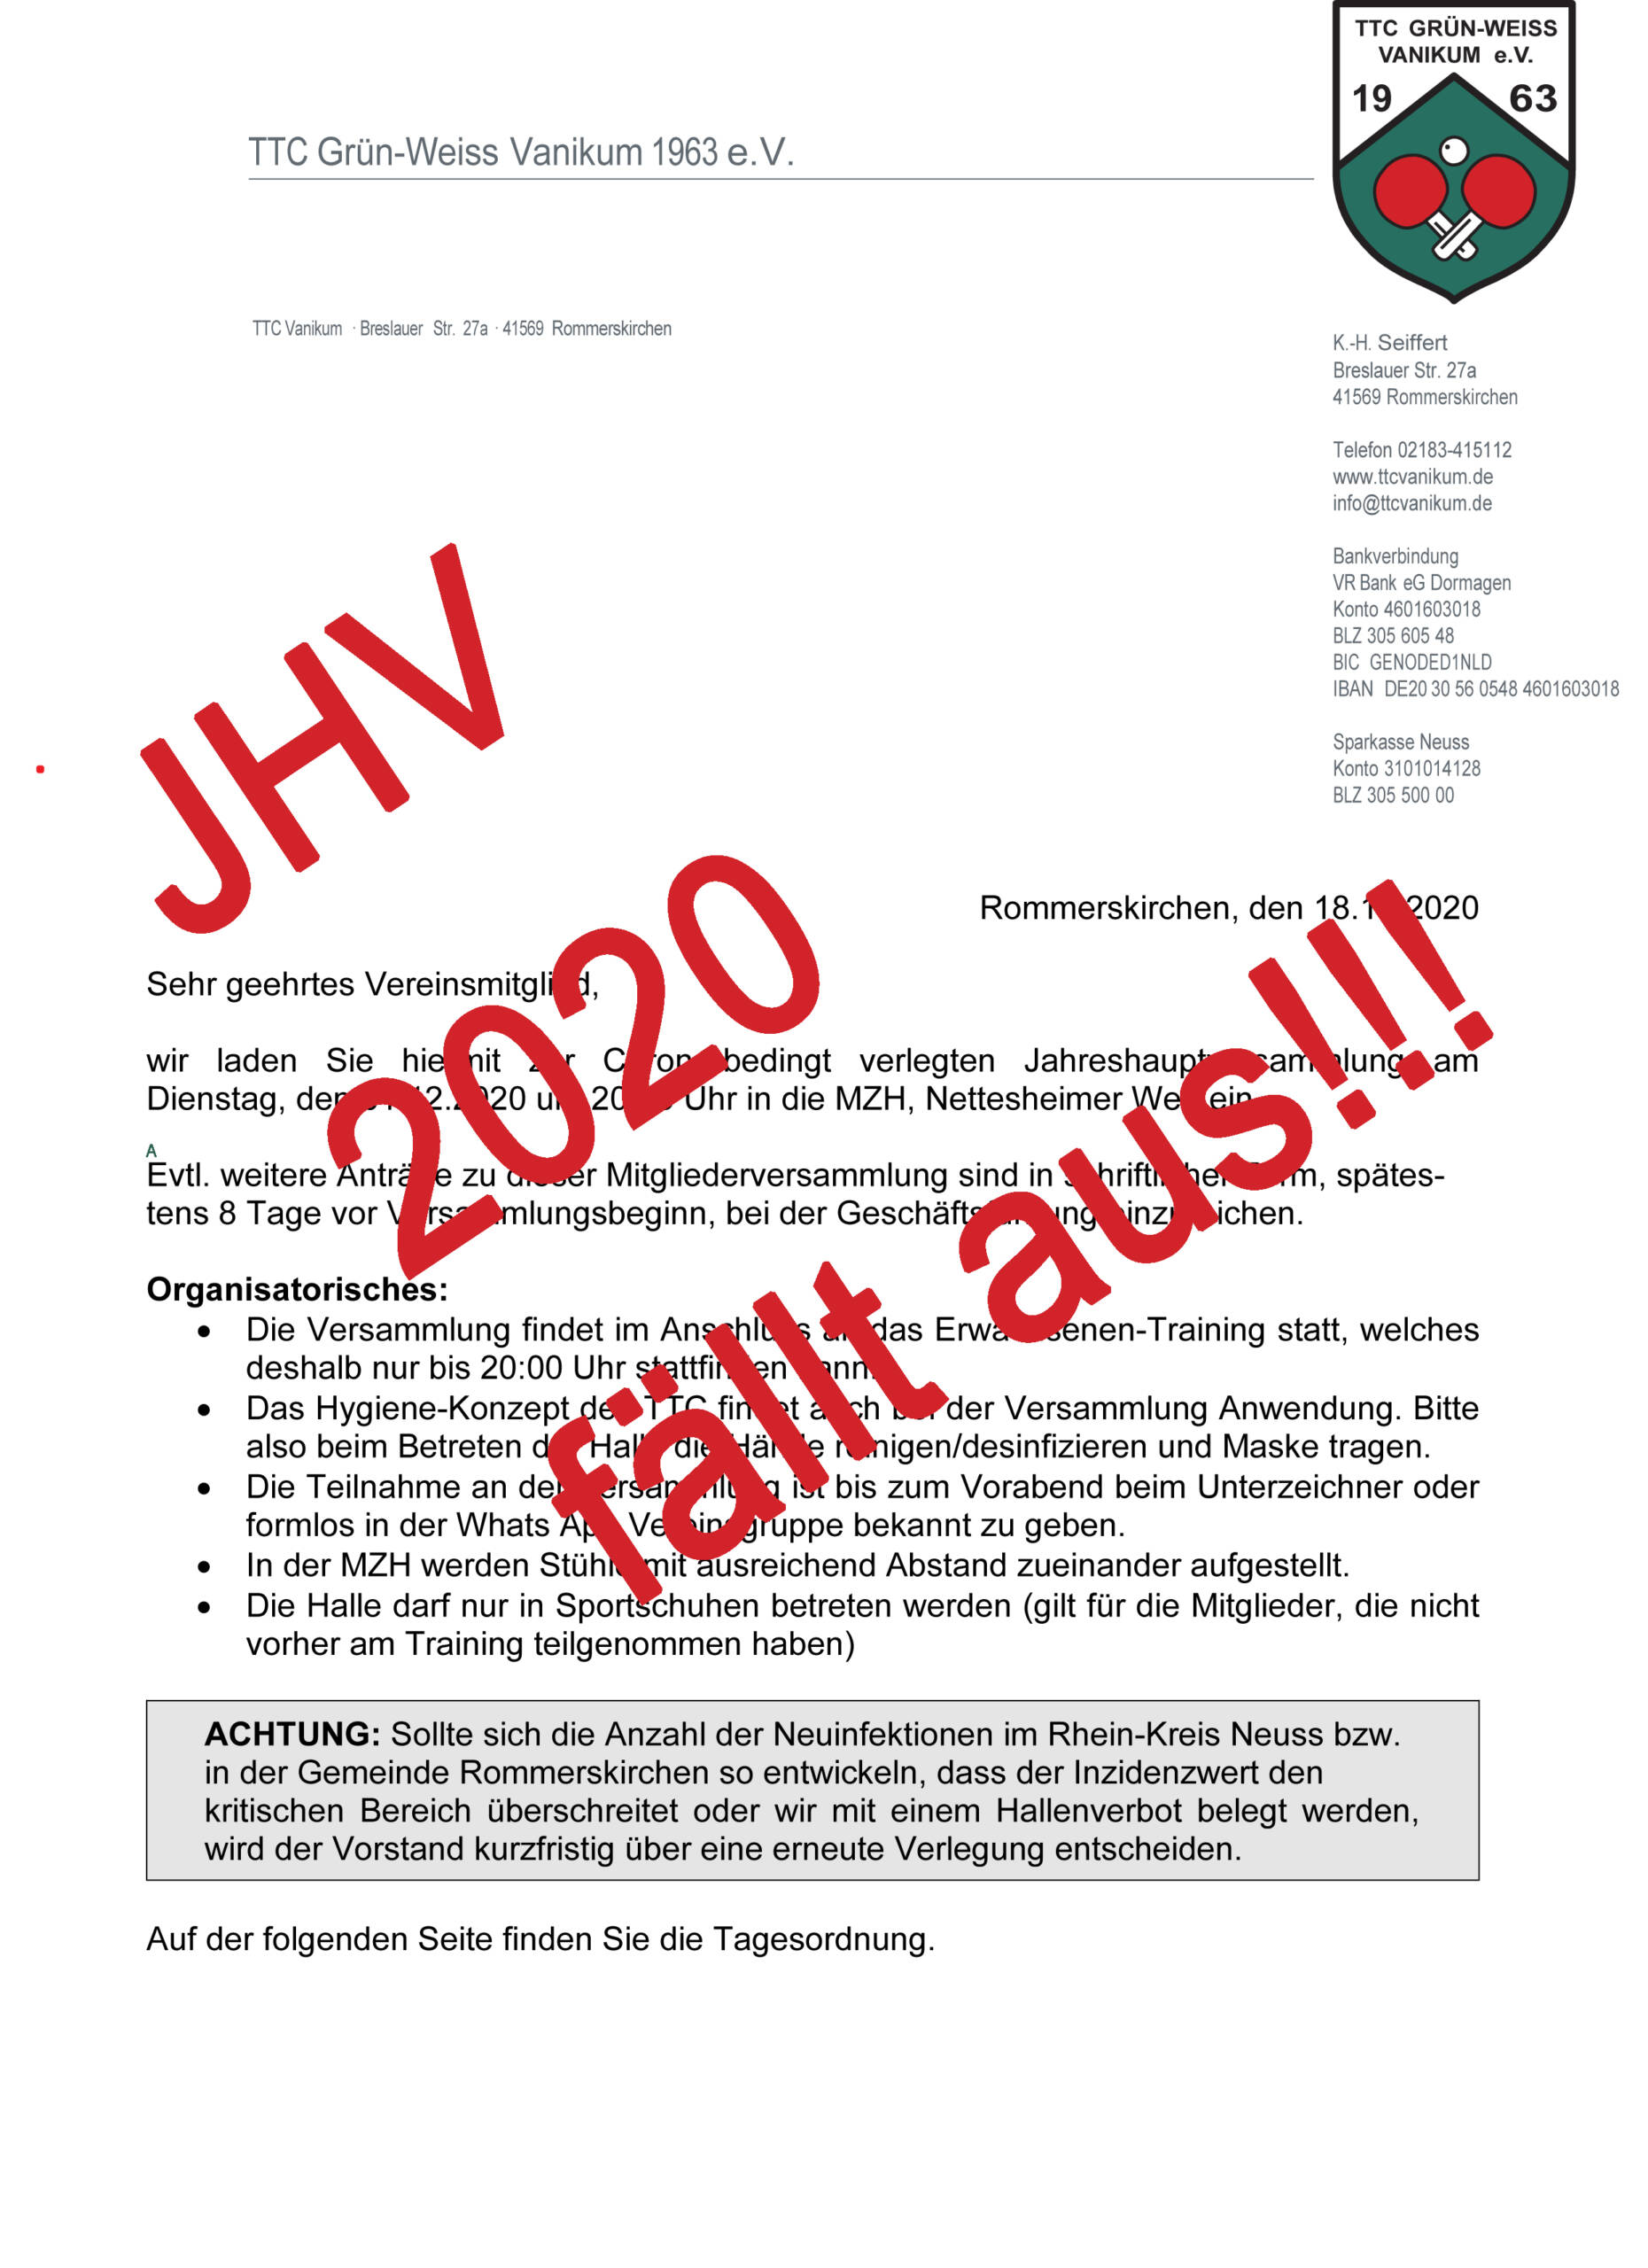 JHV 2020 fällt aus!